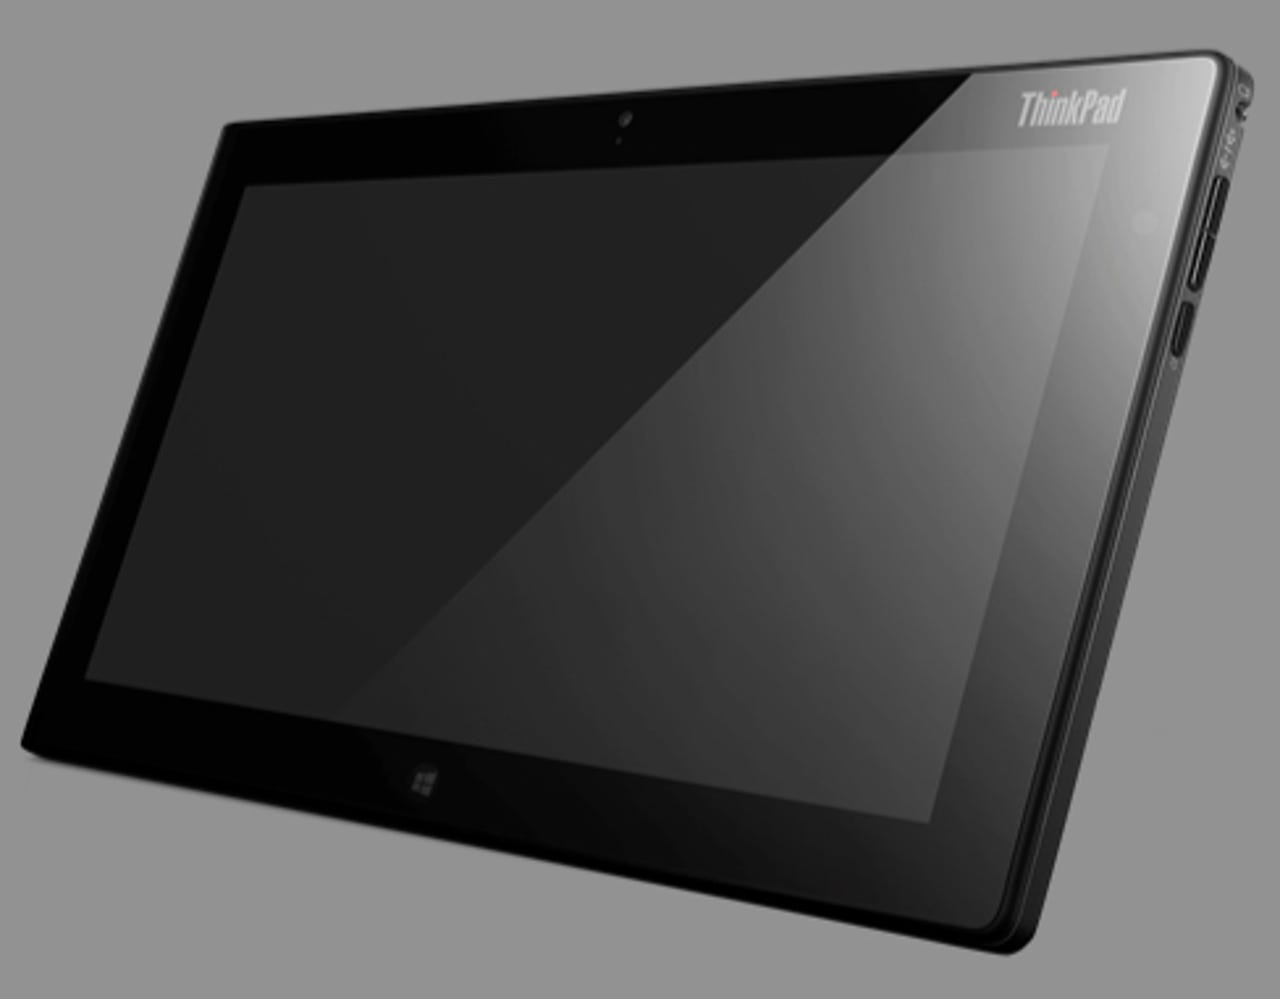 04-thinkpad-tablet-2.jpg